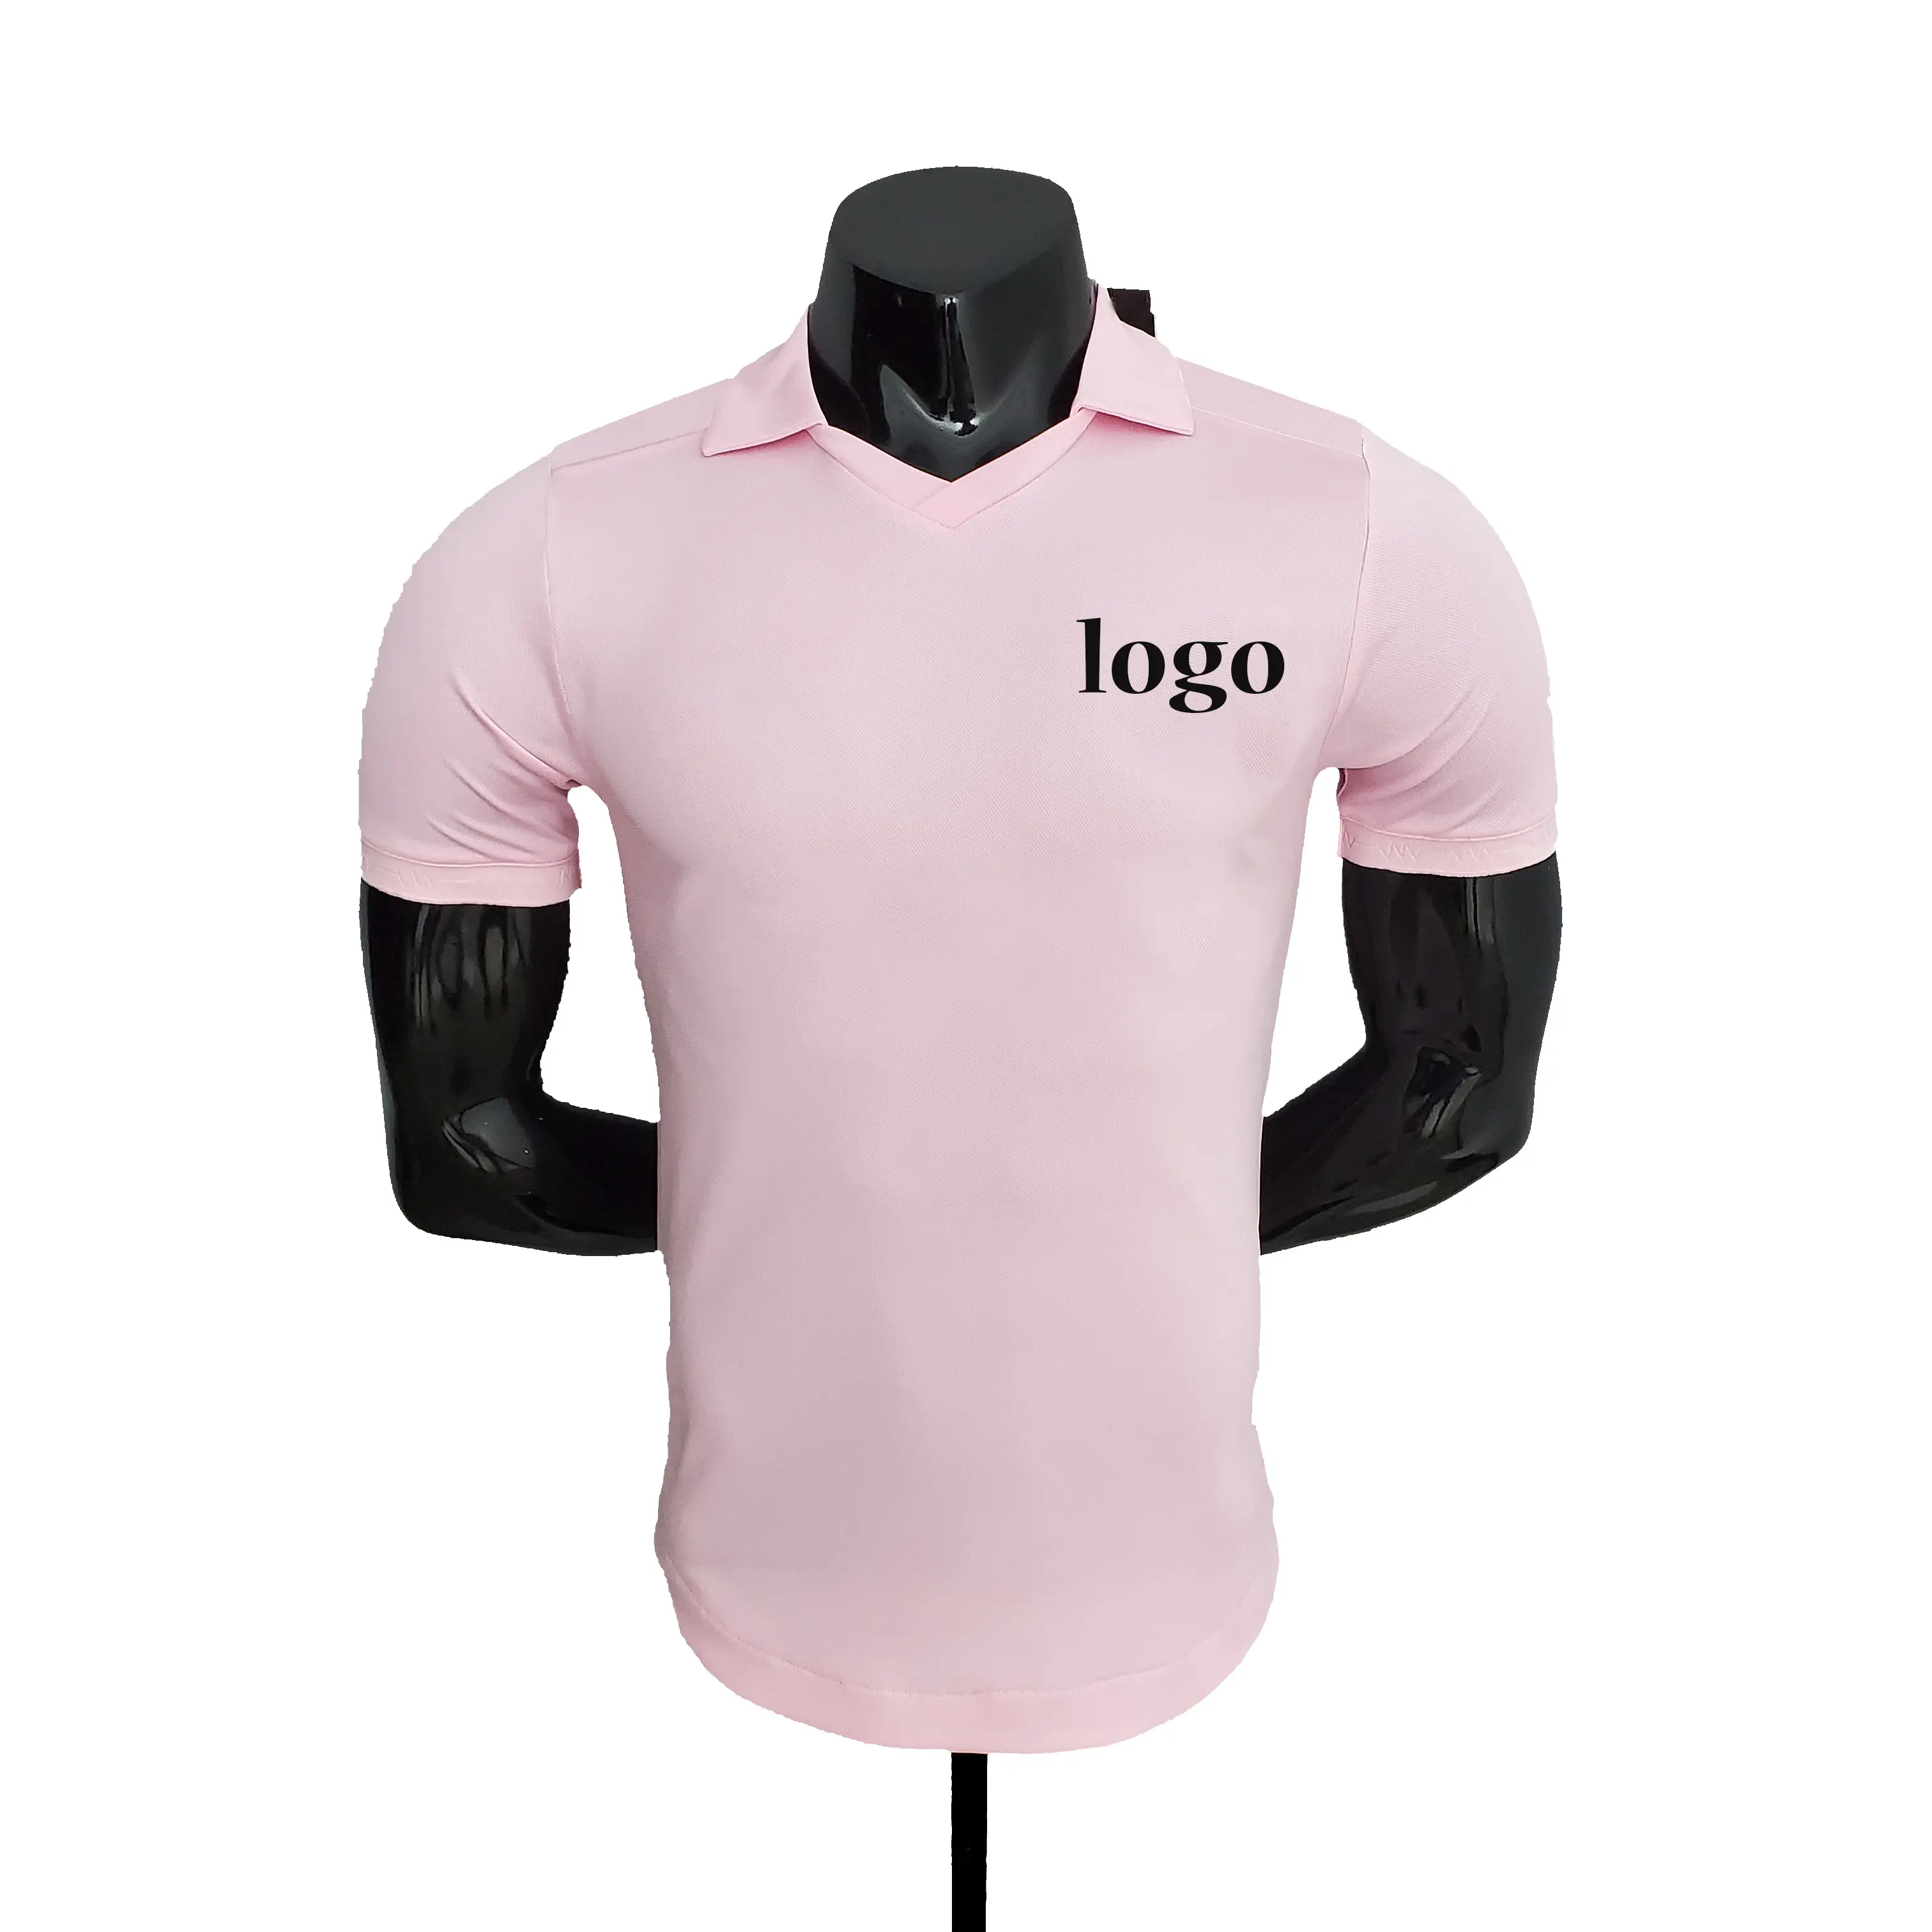 सबसे गर्म उच्च गुणवत्ता वाले फुटबॉल क्लब पुरुषों की छोटी आस्तीन गुलाबी फुटबॉल जर्सी खेल